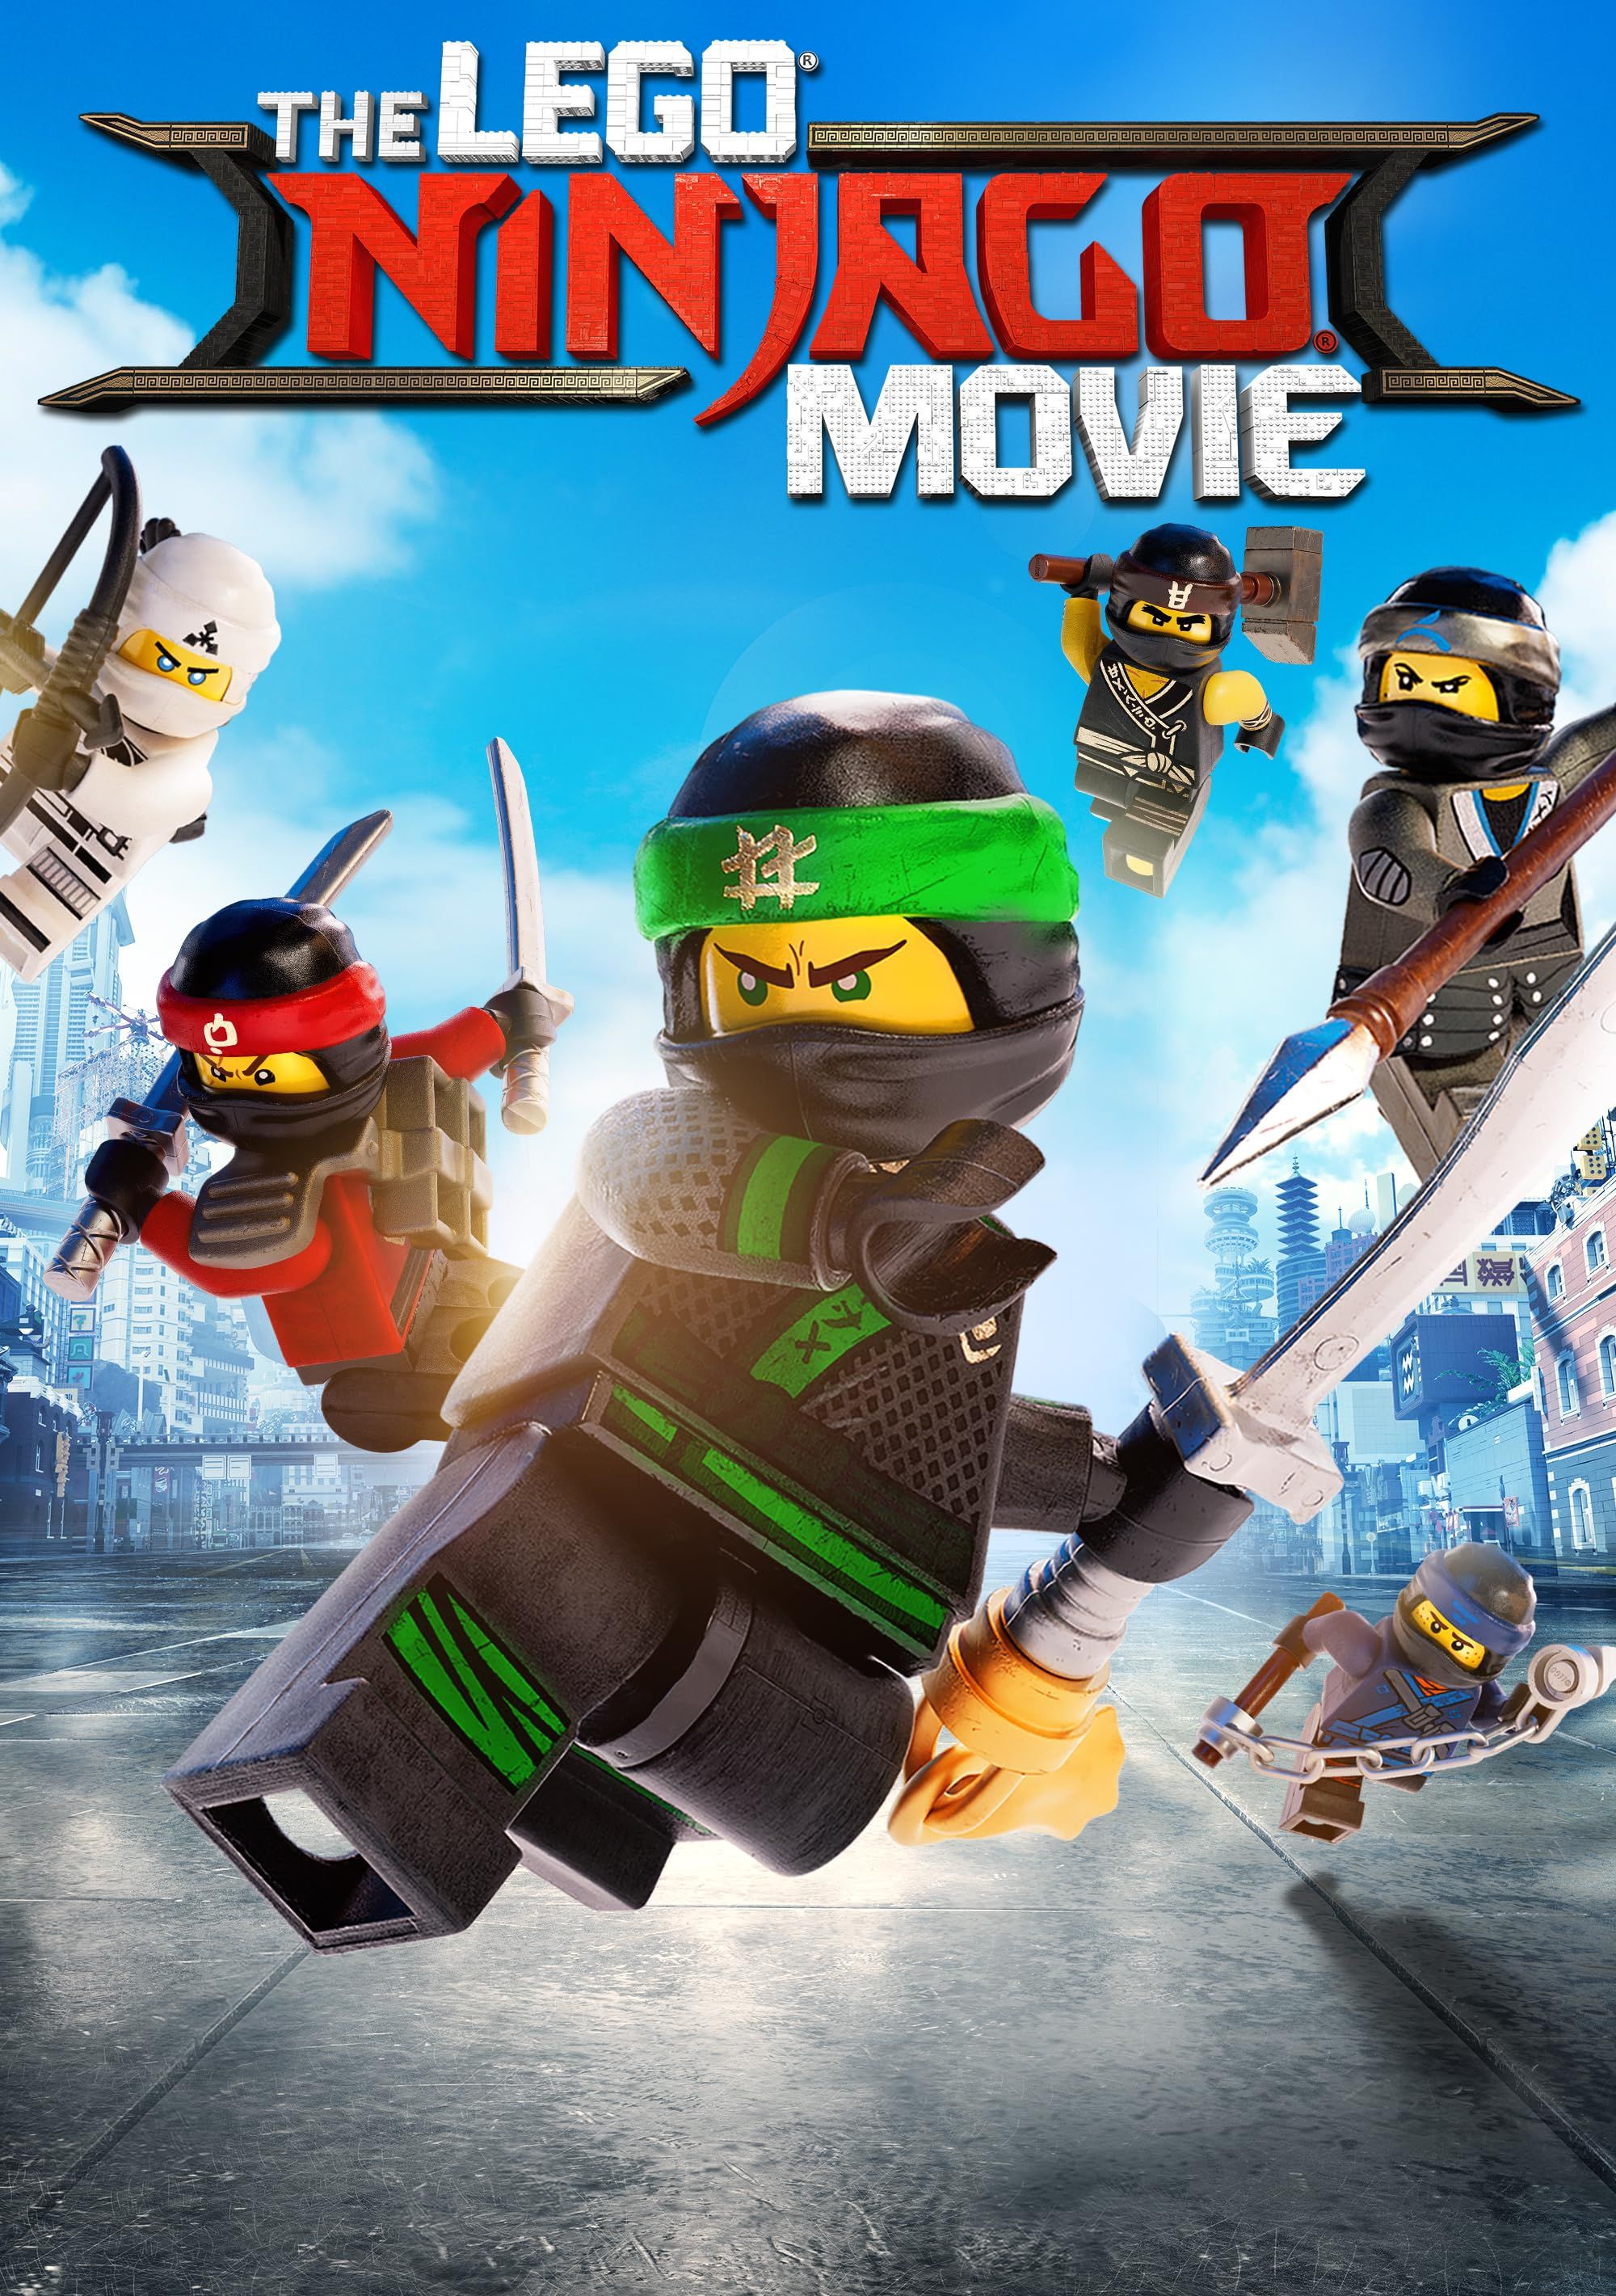 The Lego Ninjago Movie (2017) Hindi Dubbed download full movie